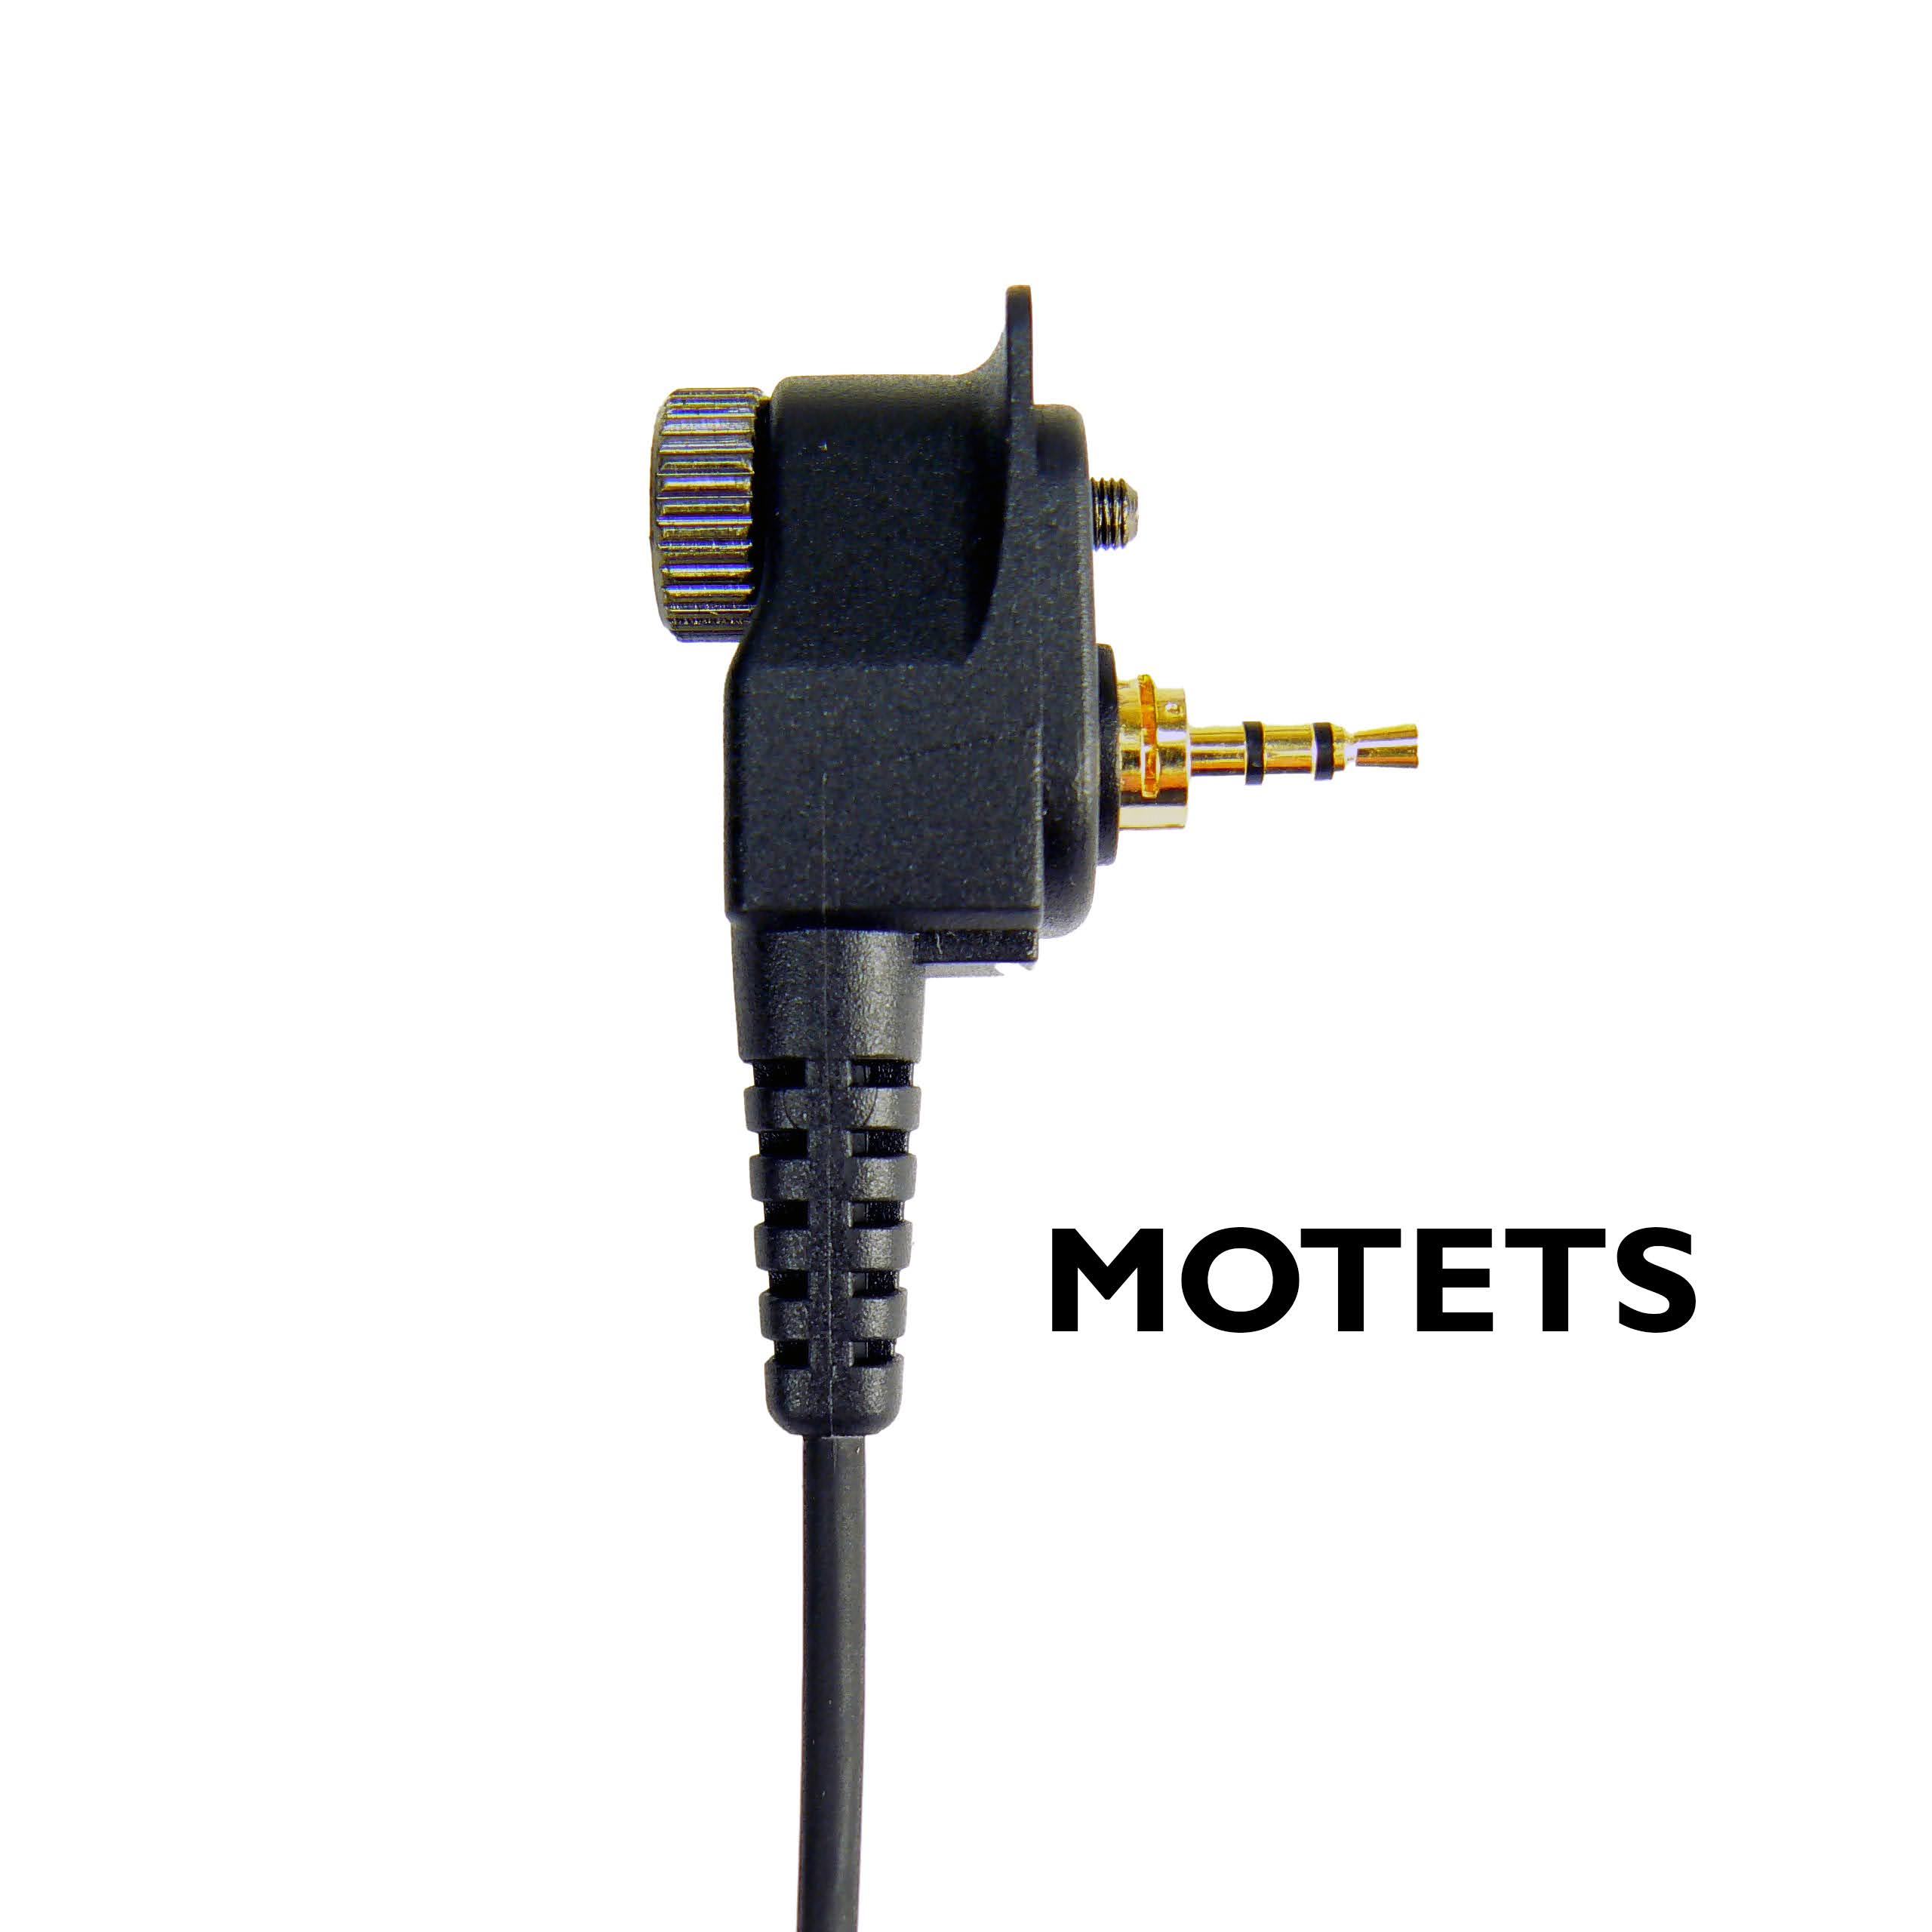 Motorola single pin and screw jack plug ending MOTETS